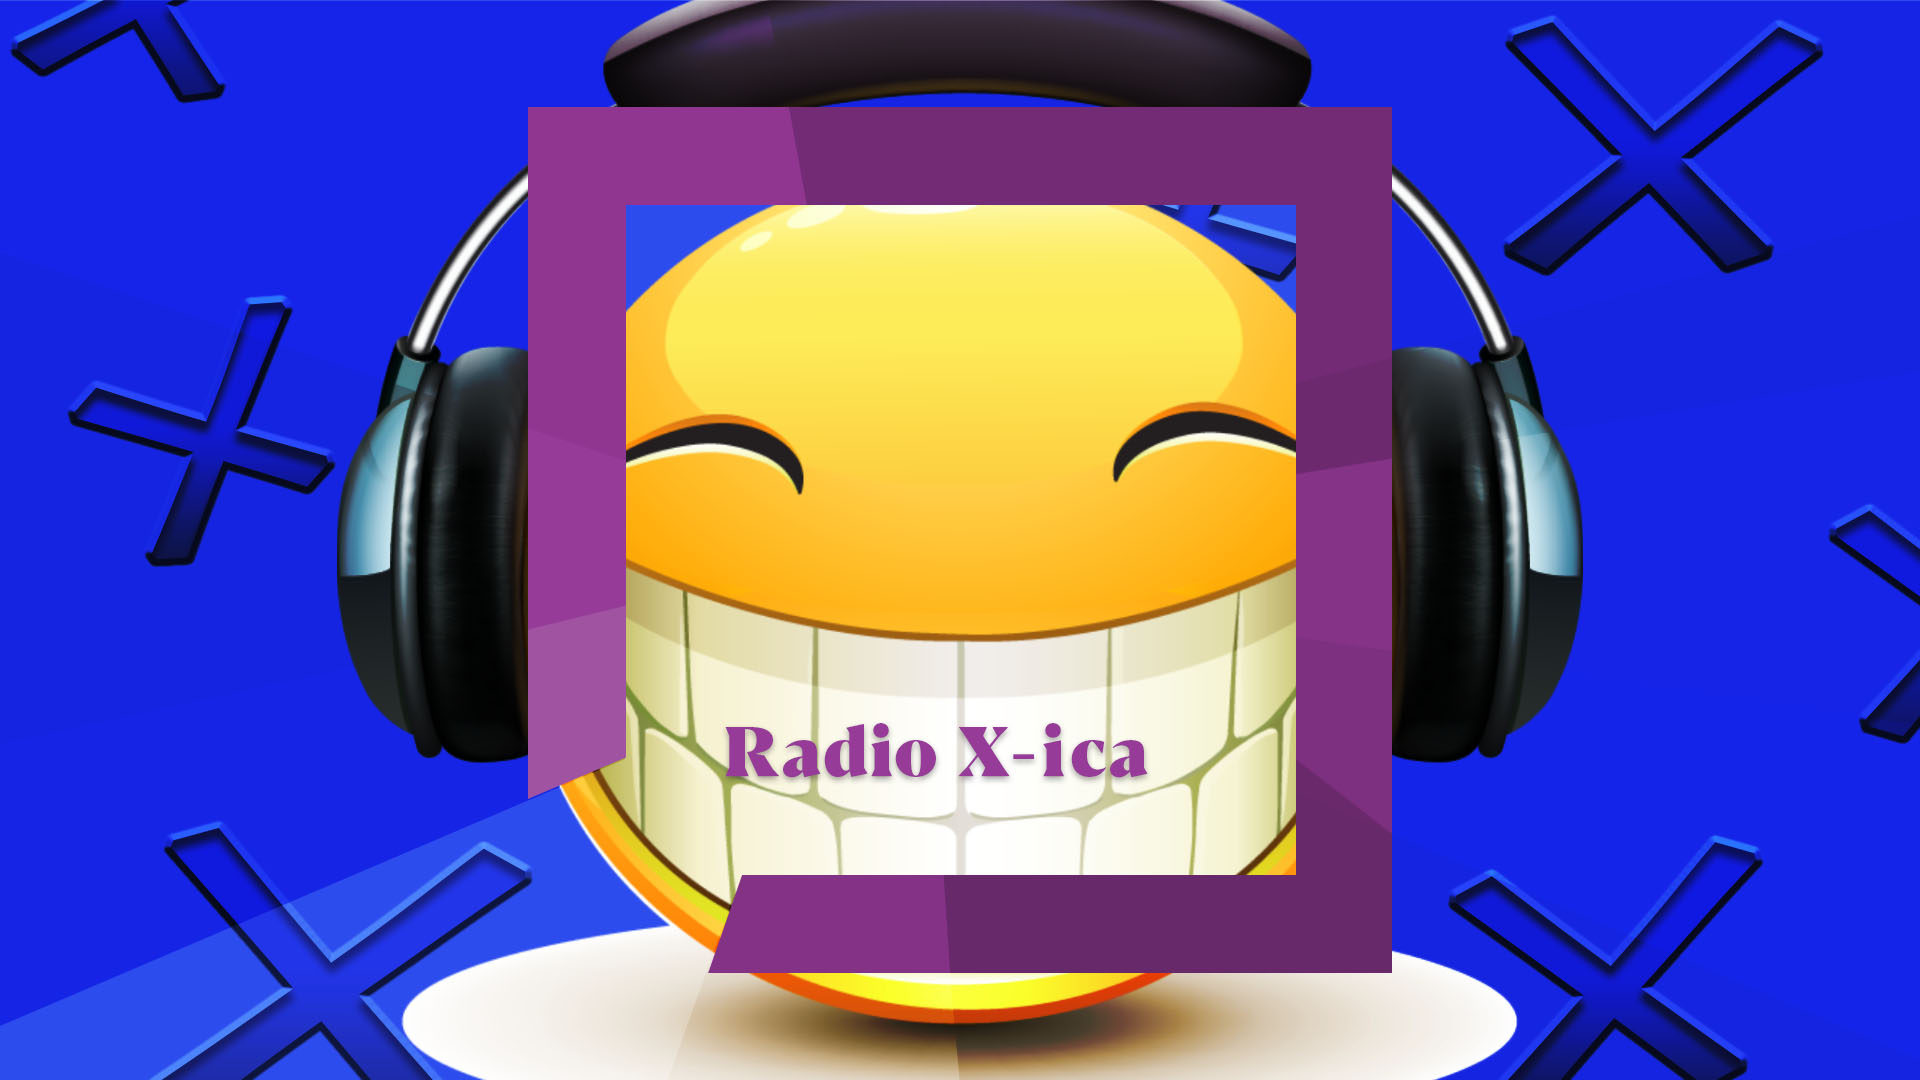 Radio x-ica